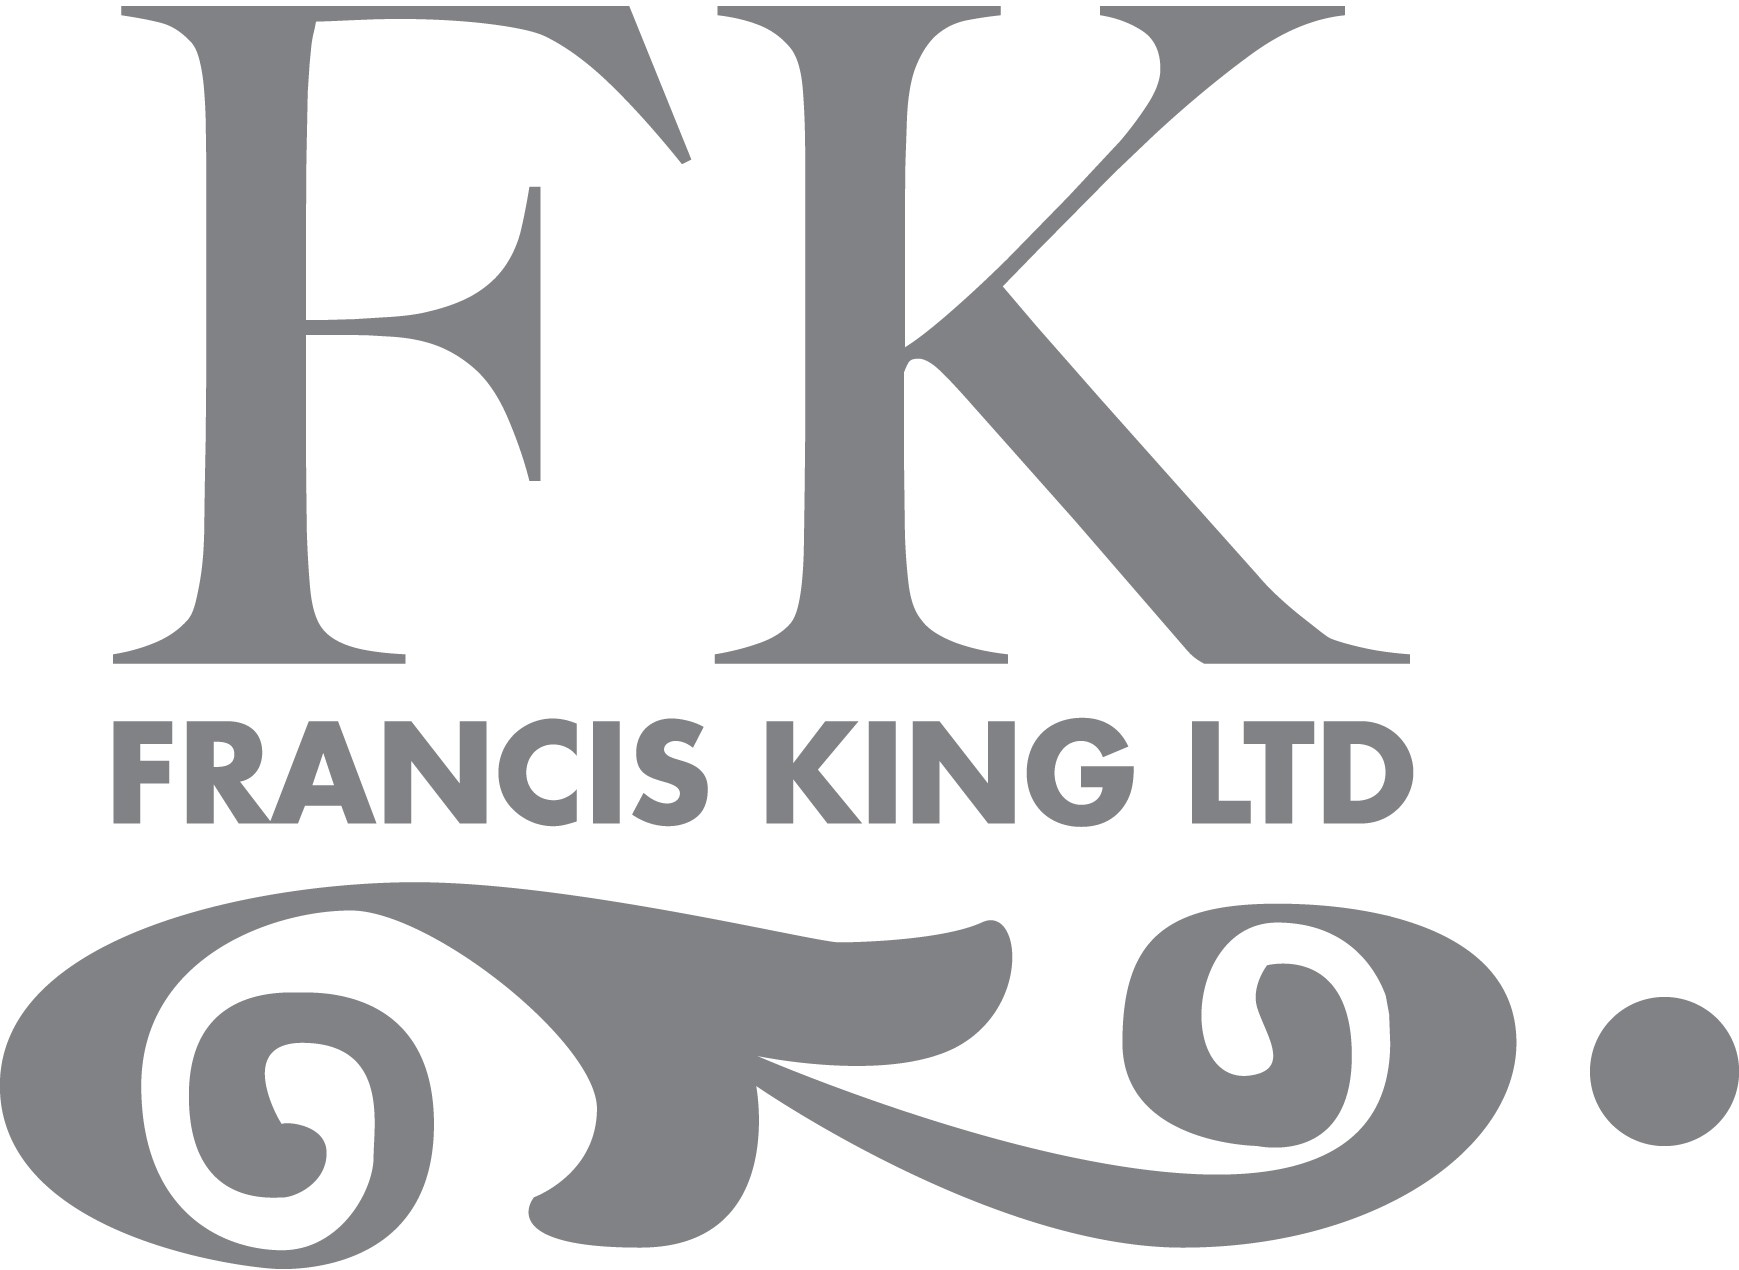 Francis King Ltd.